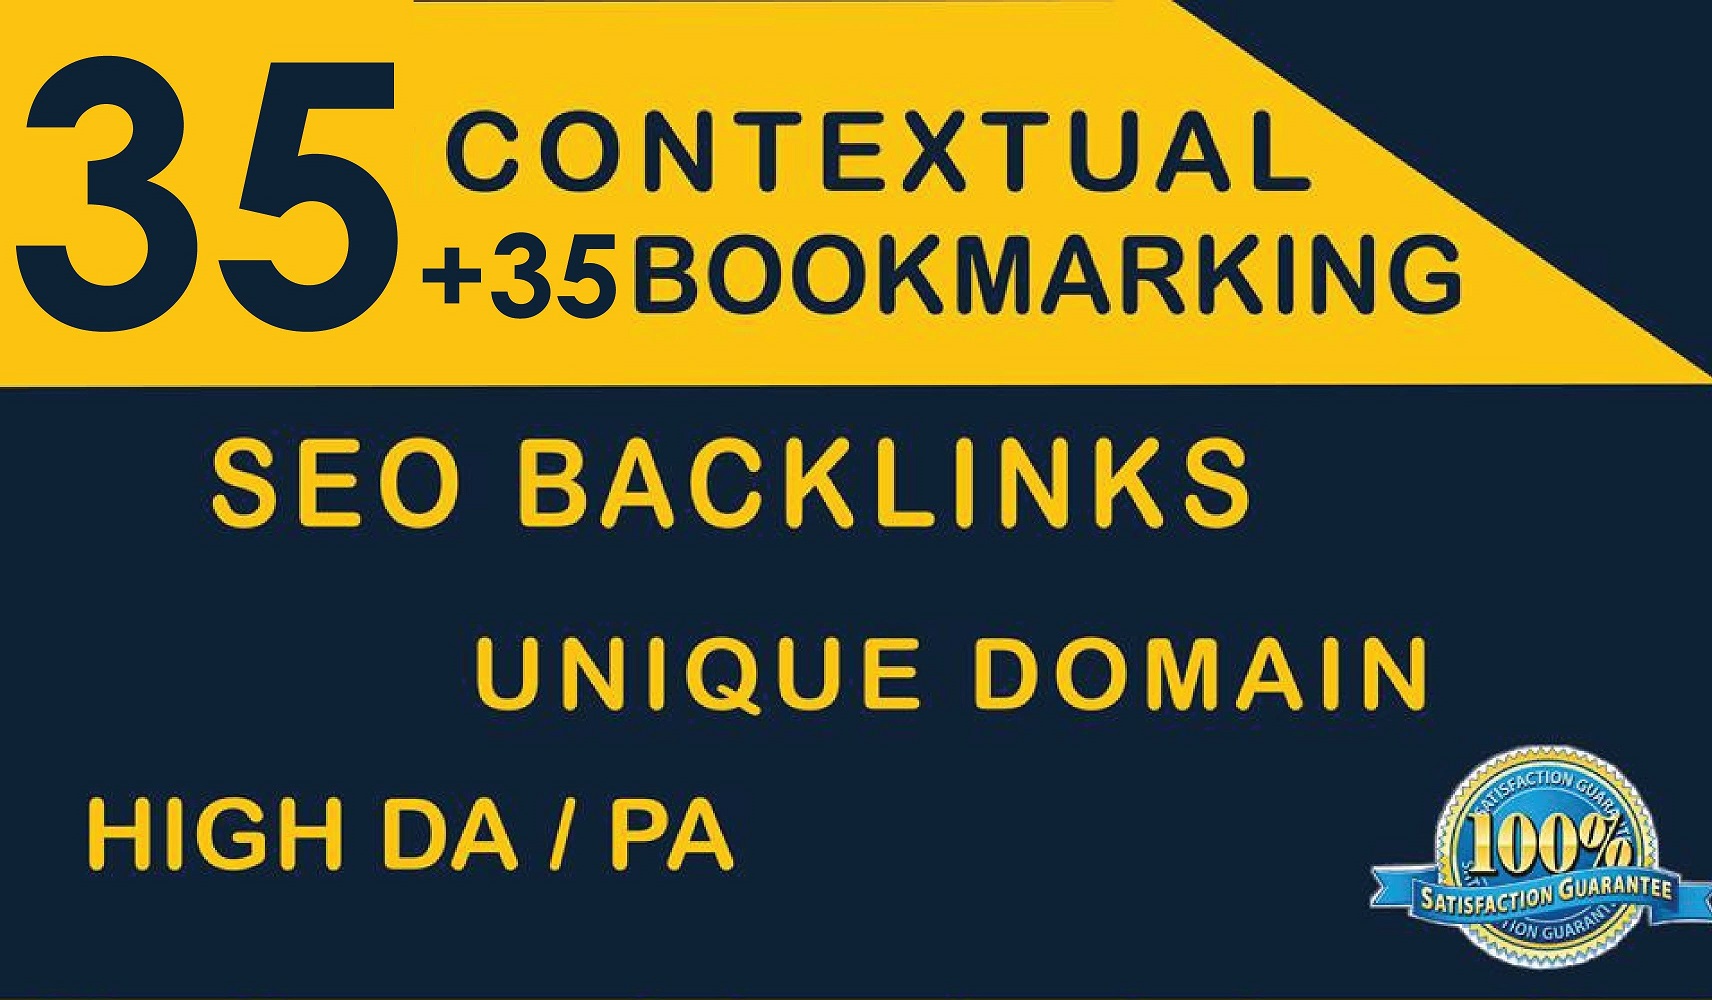 Build Seo Backlinks 35 Contextual + 35 SOCIAL Bookmaking Unique Domain High DA PA